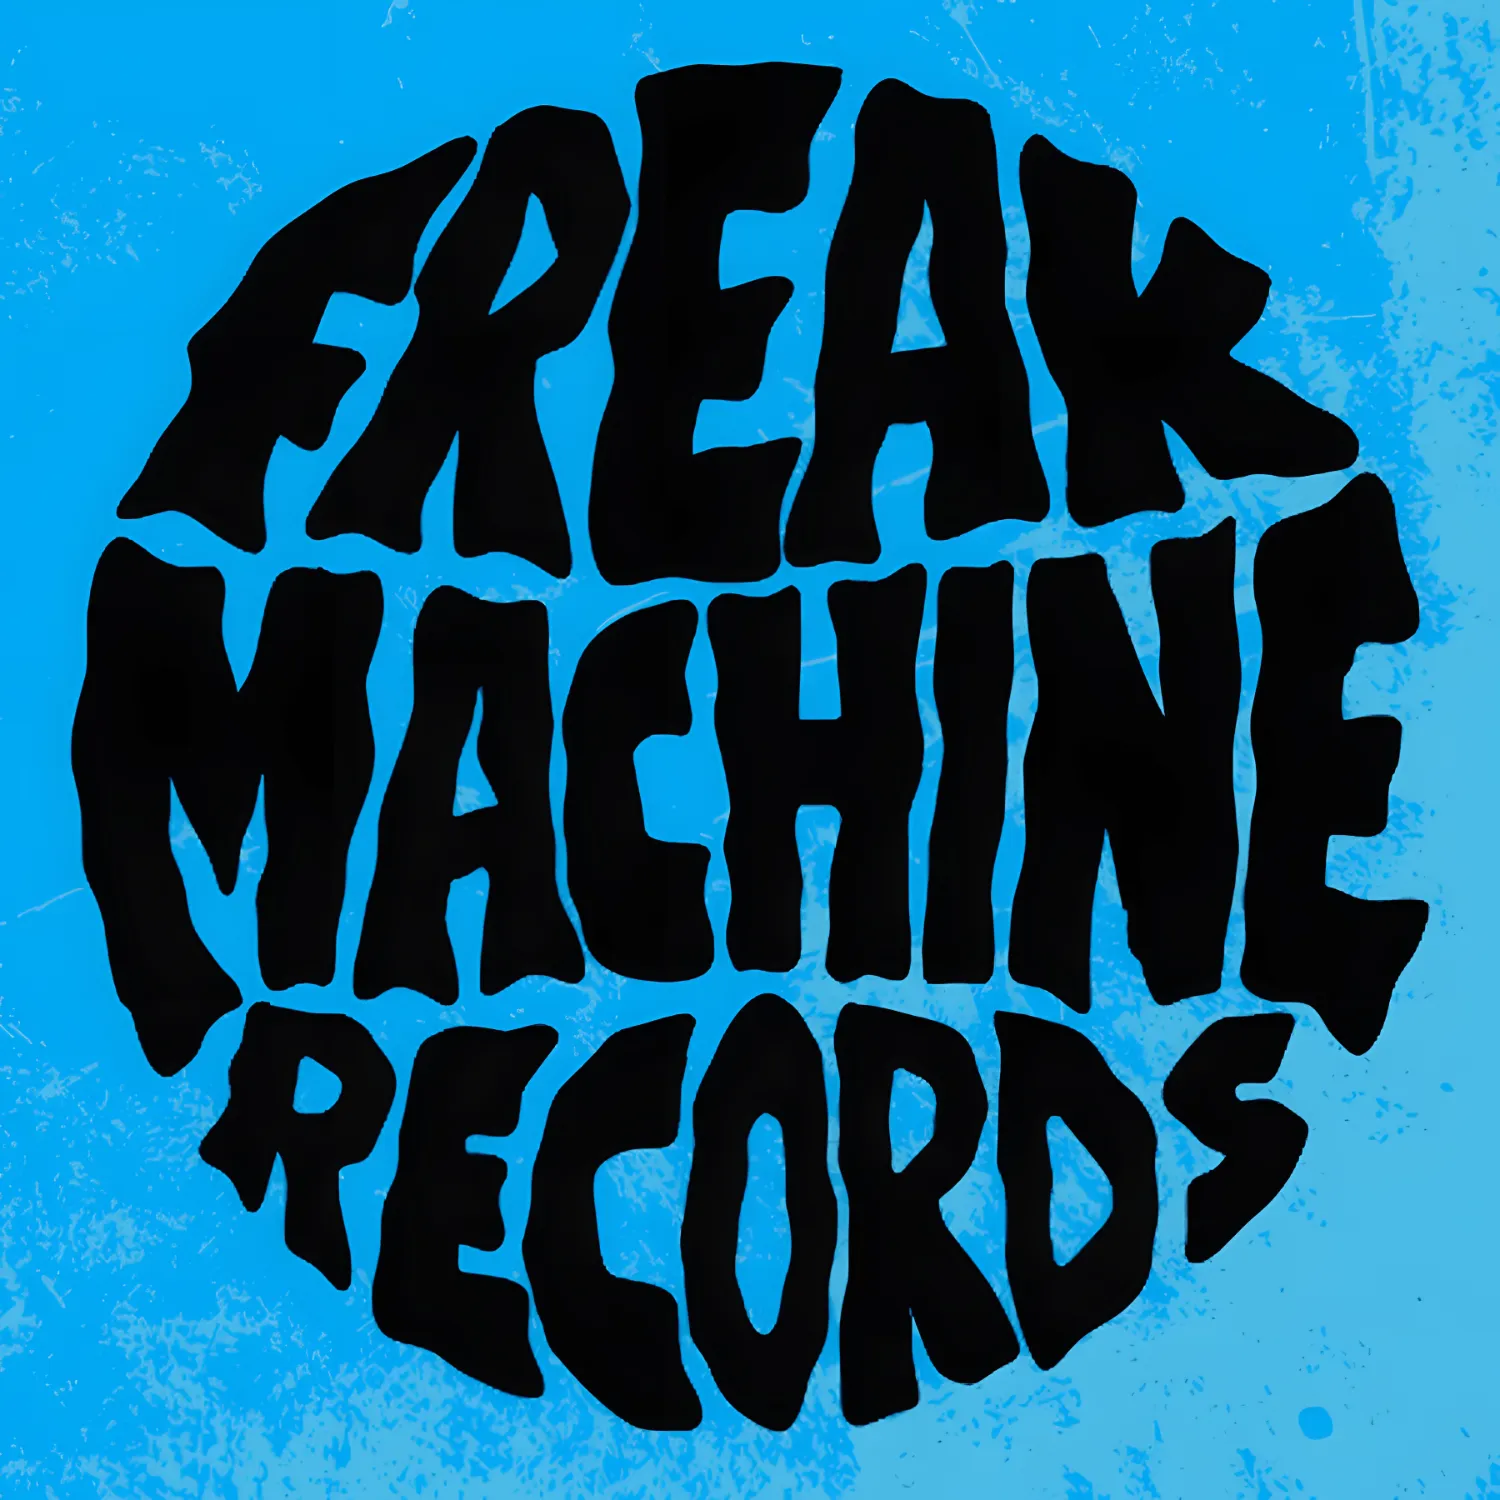 Free Machine Records Sticker Pack